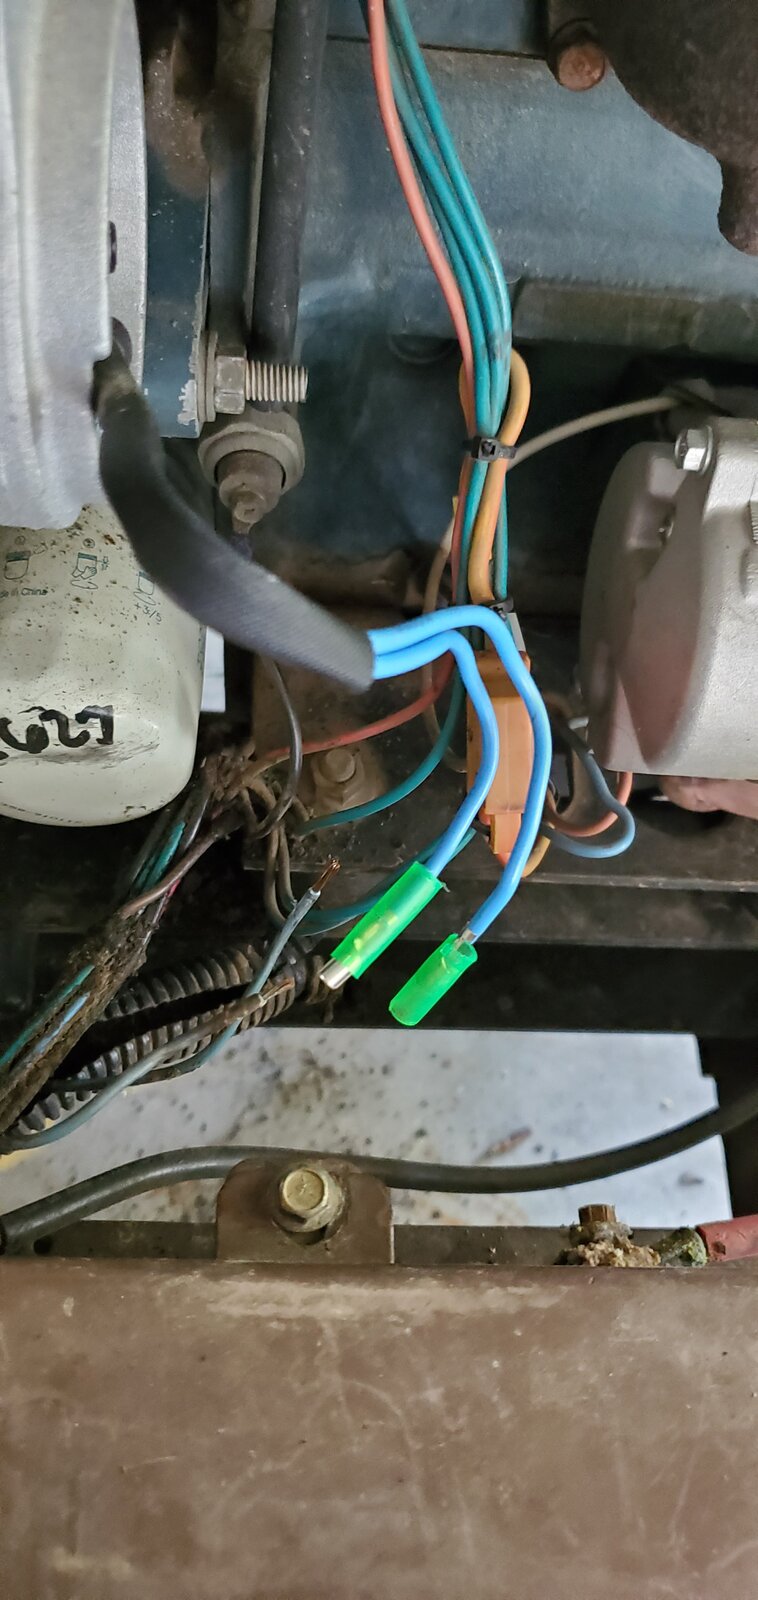 kubota alternator wiring diagram